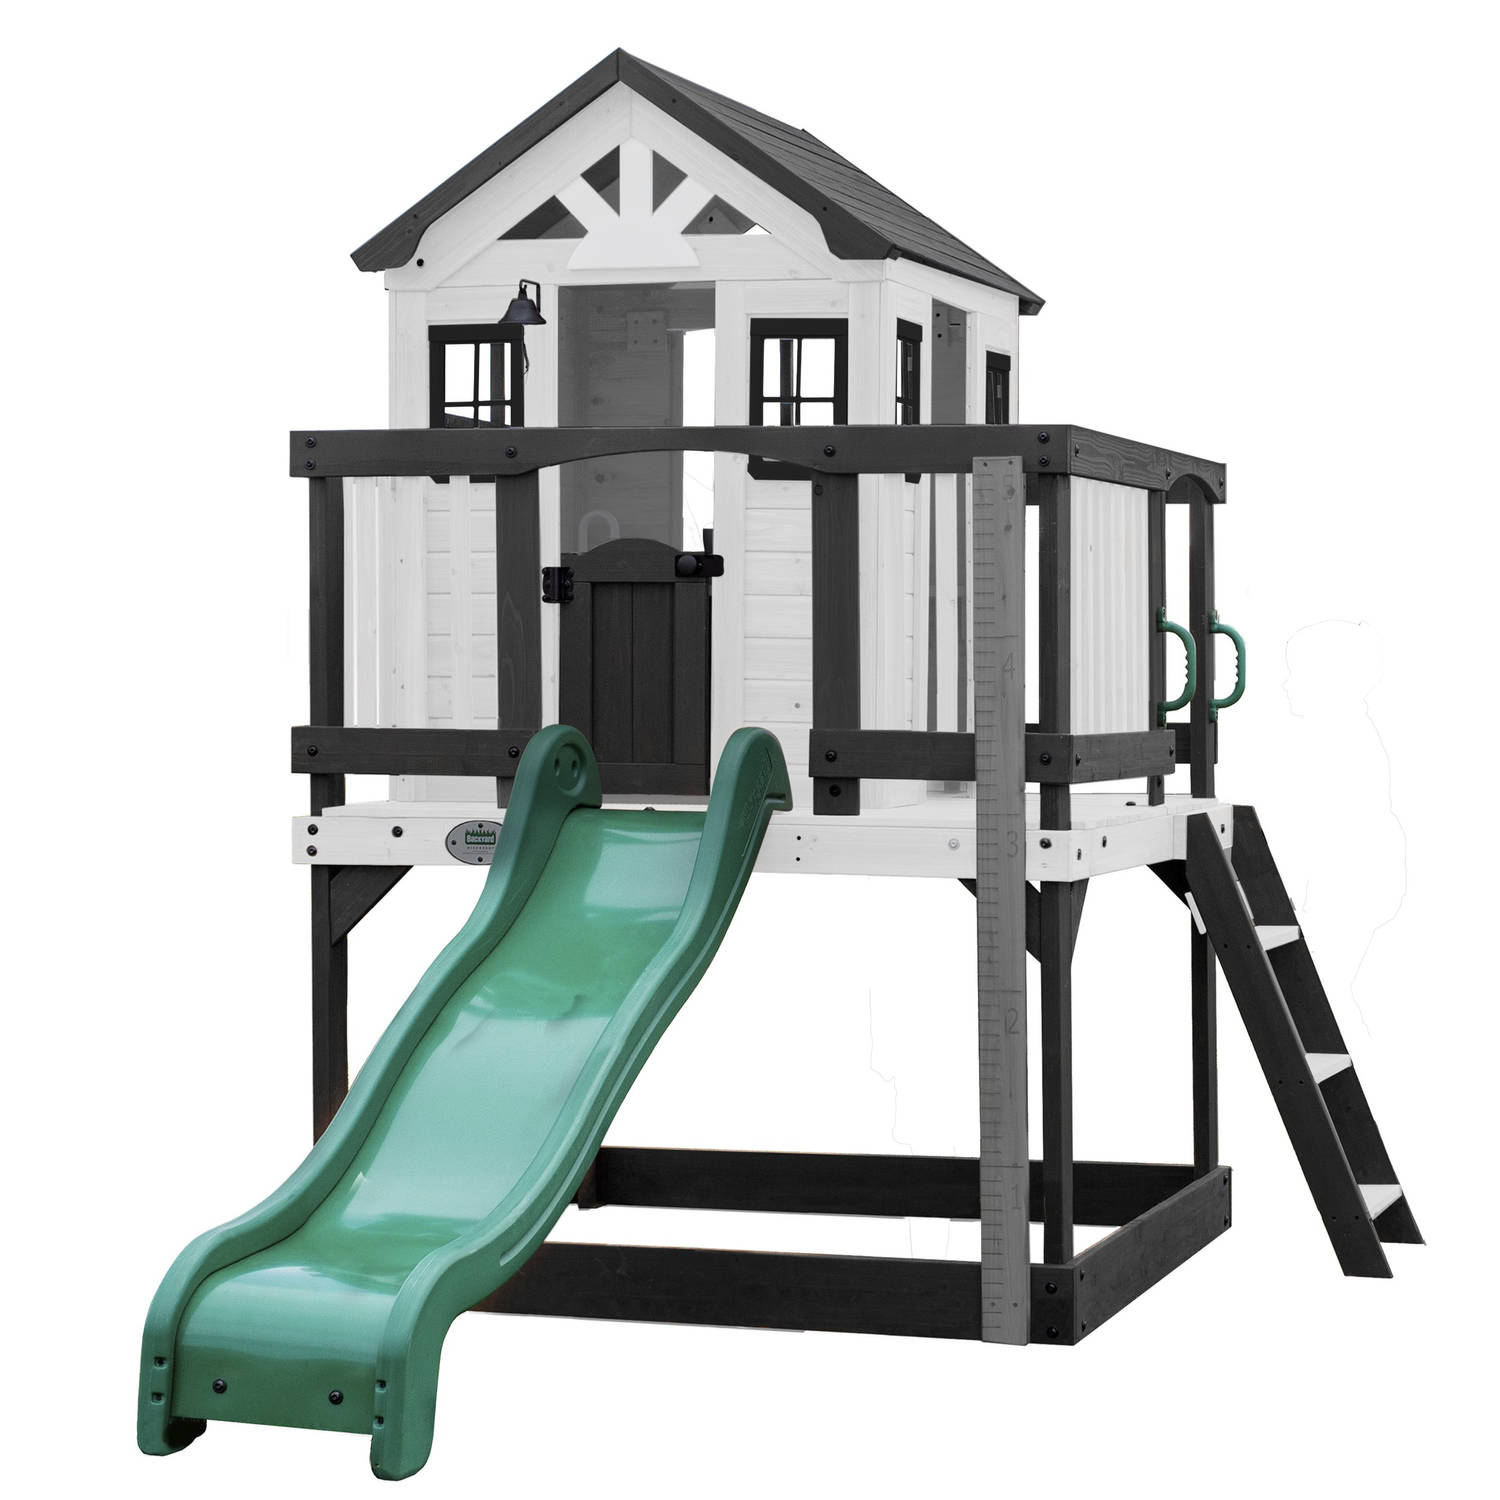 Backyard Discovery Sweetwater Heights Speelhuis op palen met groene glijbaan, speelkeuken, zandbak &